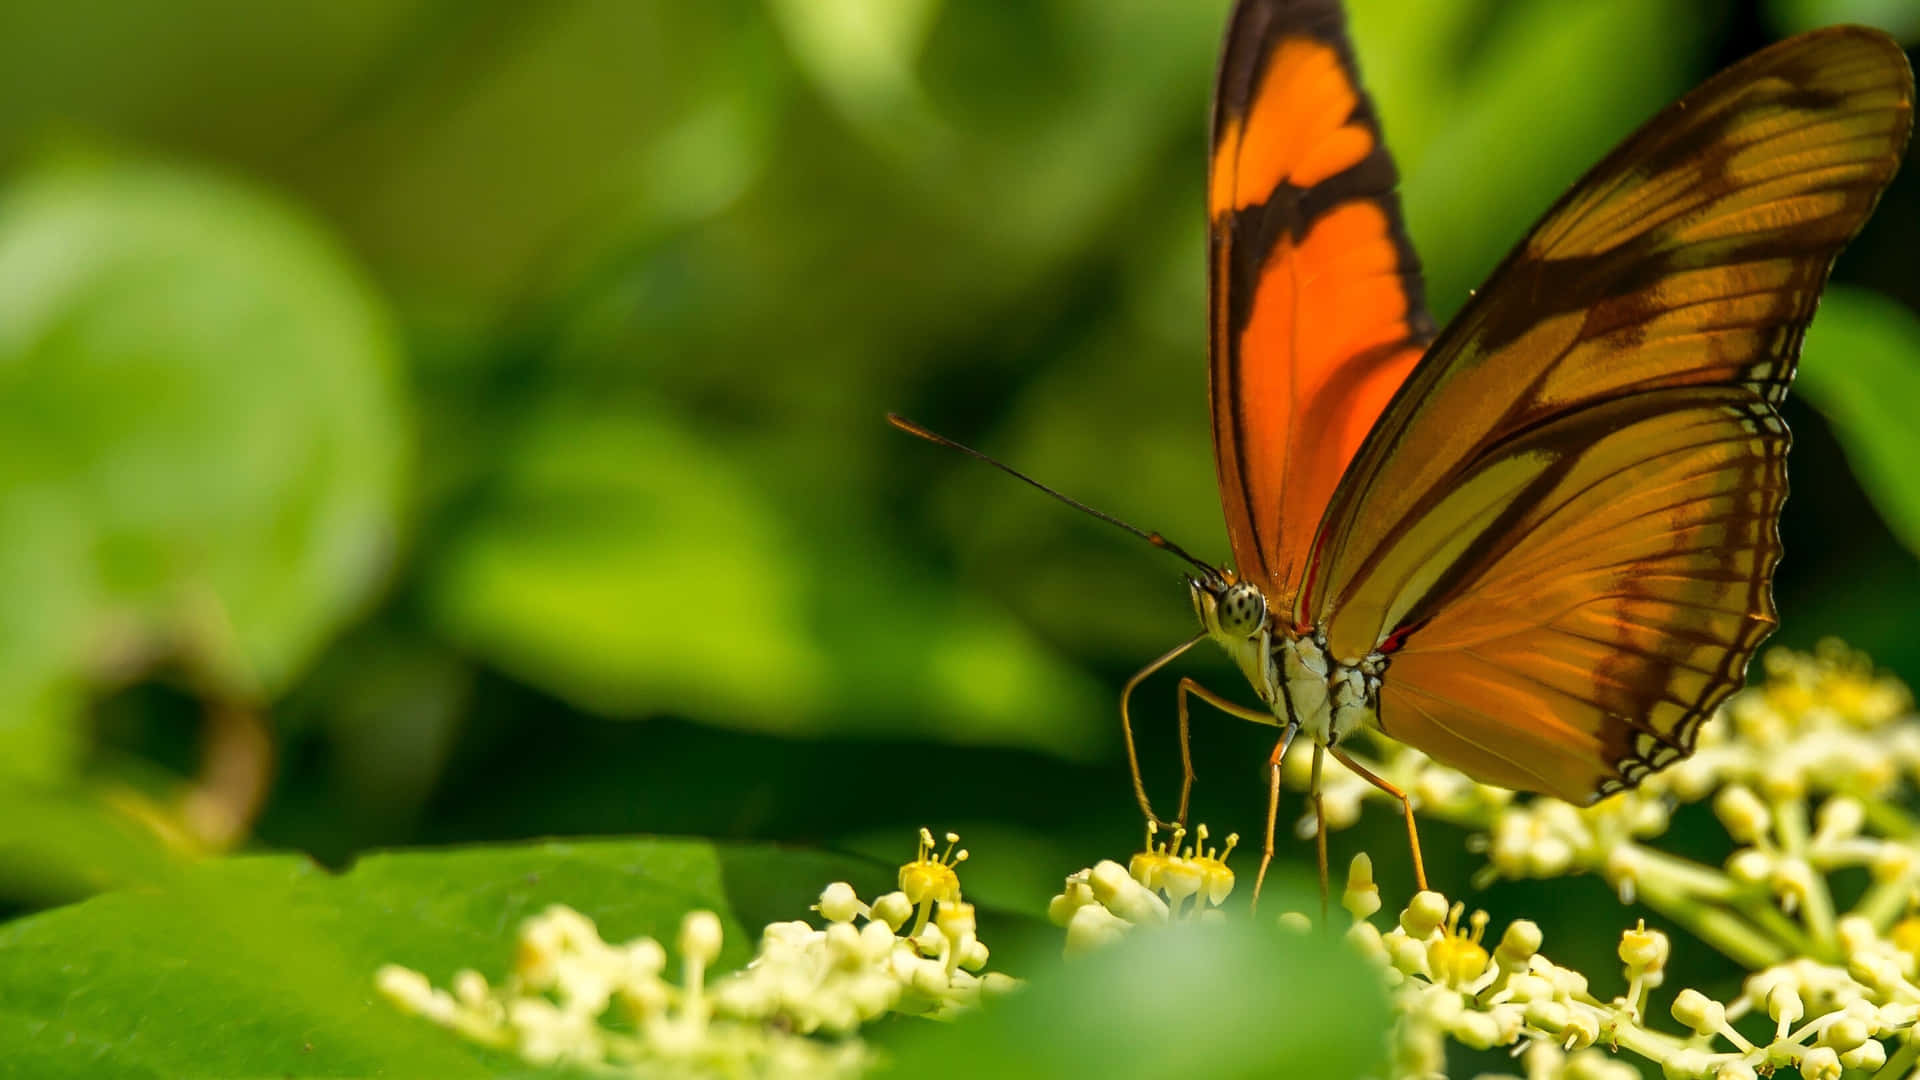 A Emerging Butterfly ready to take flight Wallpaper